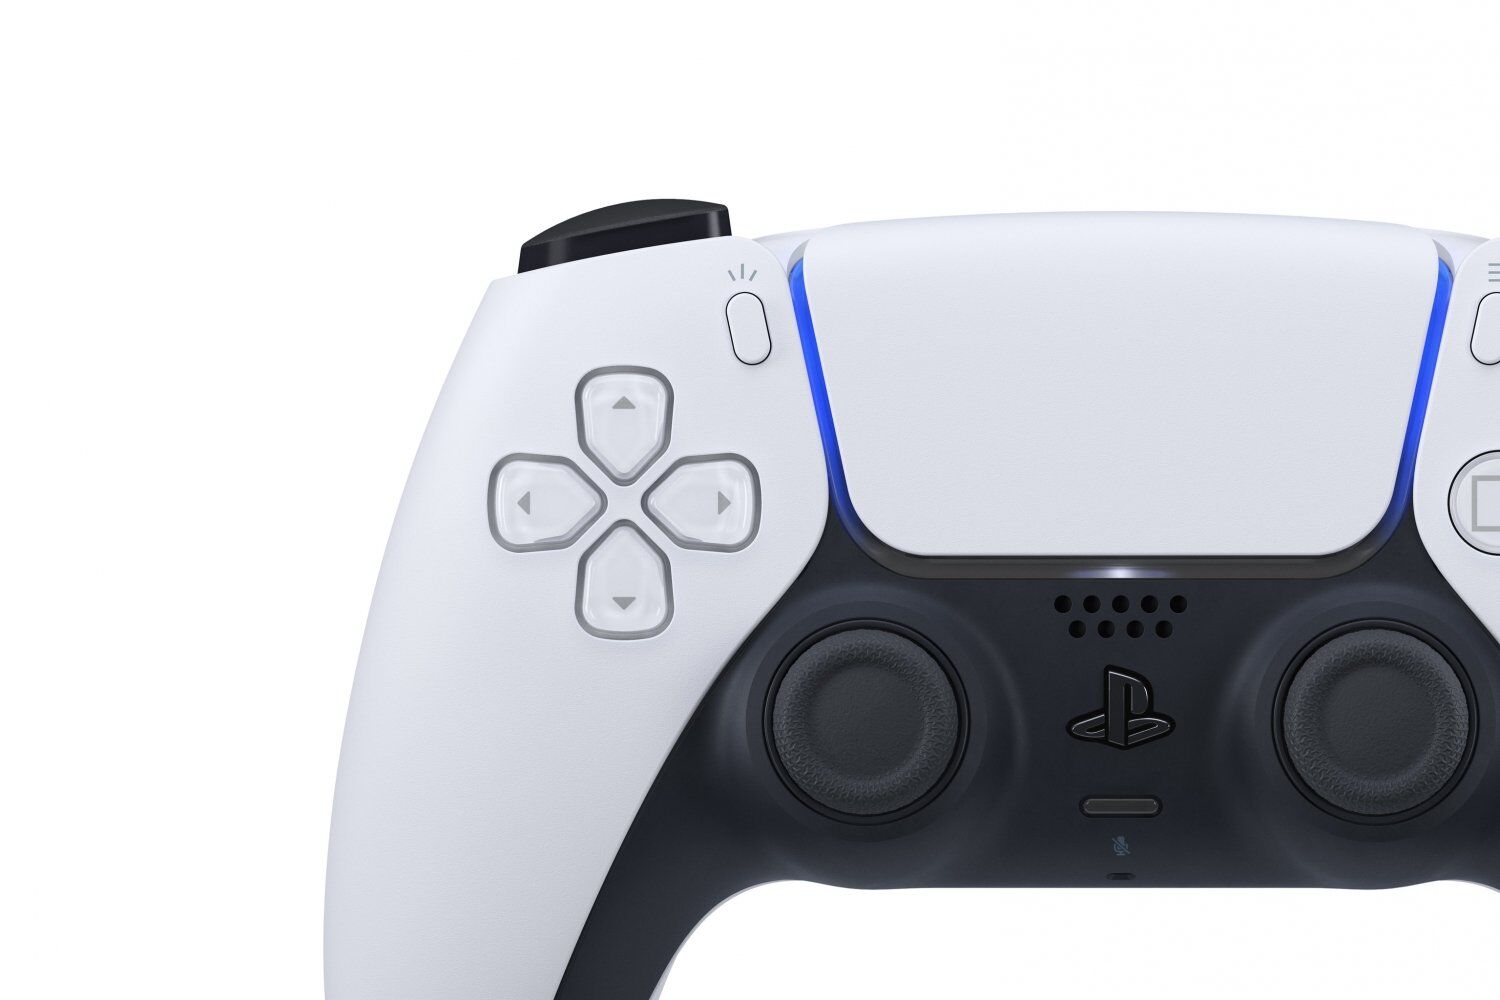 More information about "Η Sony προγραμματίζει να παρουσιάσει τα παιχνίδια νέας γενιάς για το PS5 στις 3 Ιουνίου"